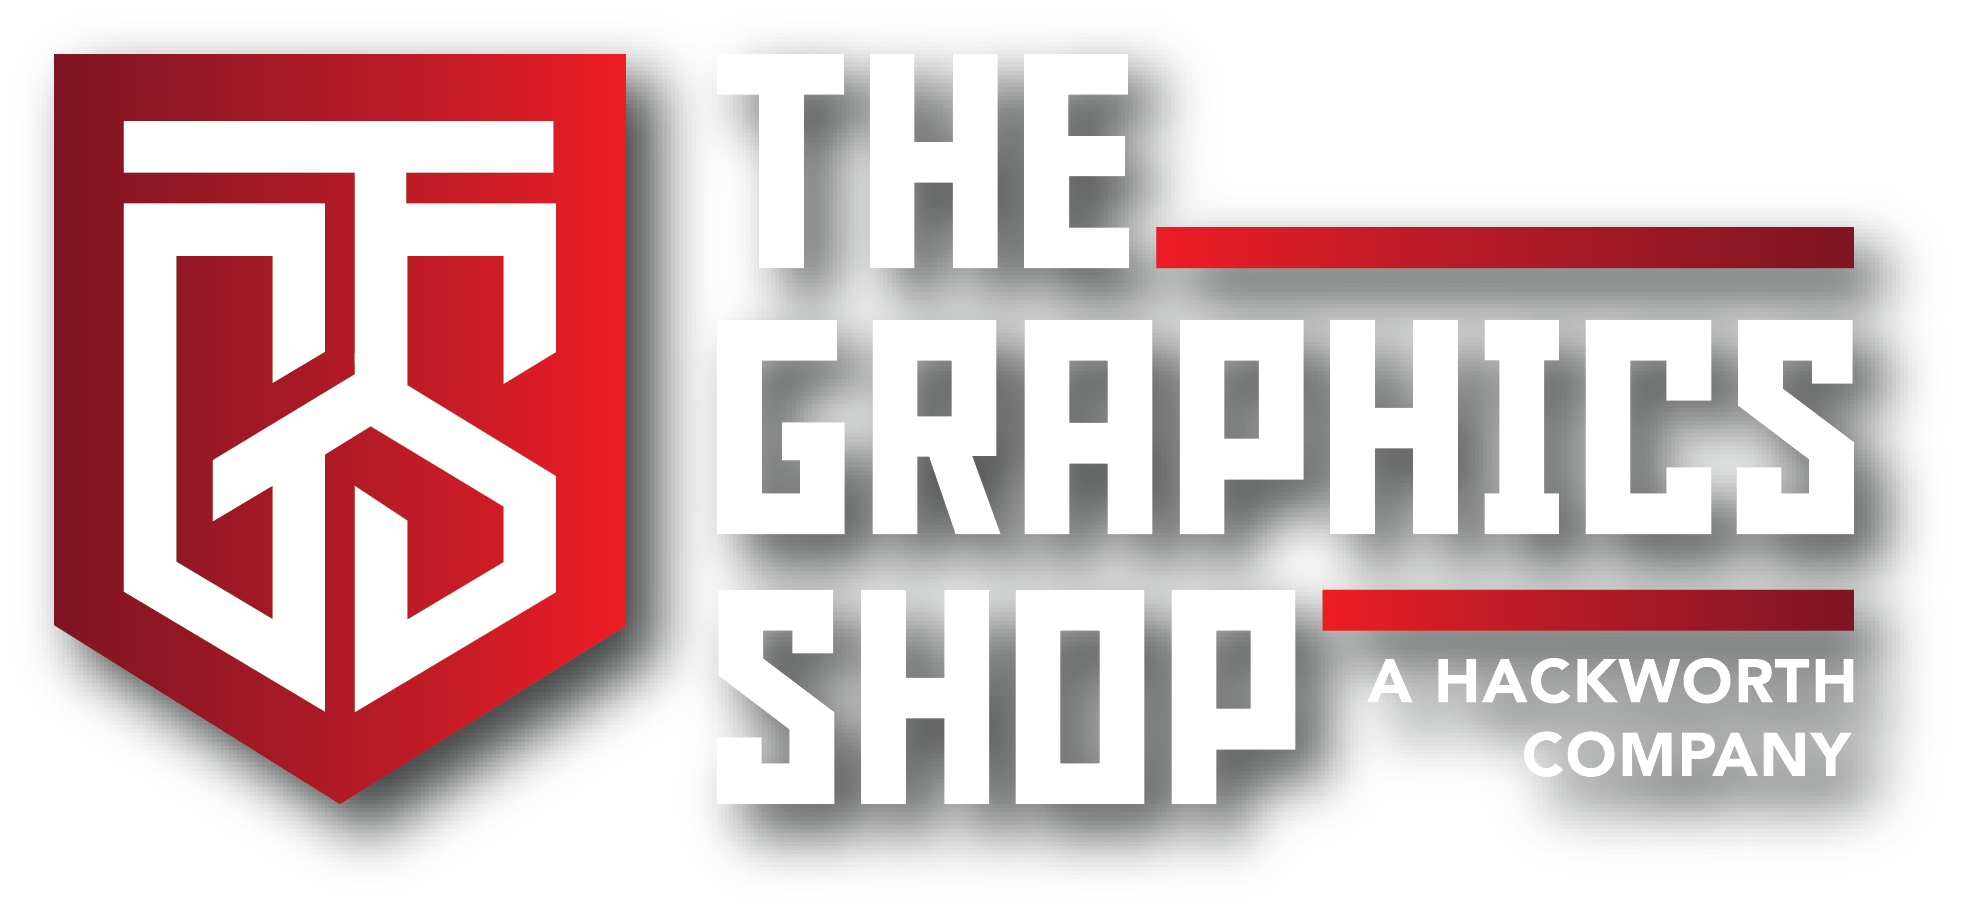 The Graphics Shop